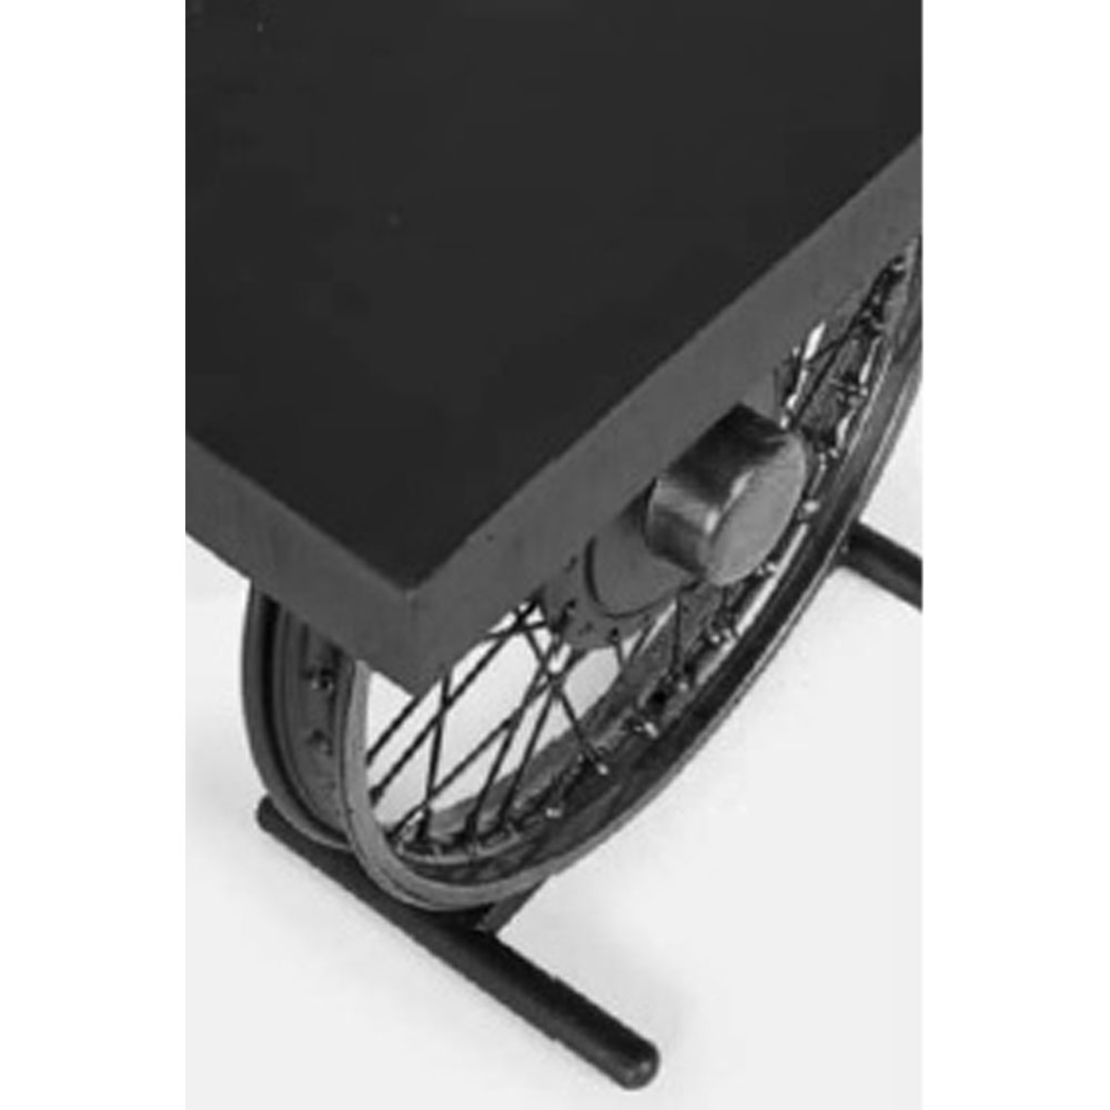 WHEEL SIDE TABLE METAL BLACK SILVER 61x36xH56cm IN